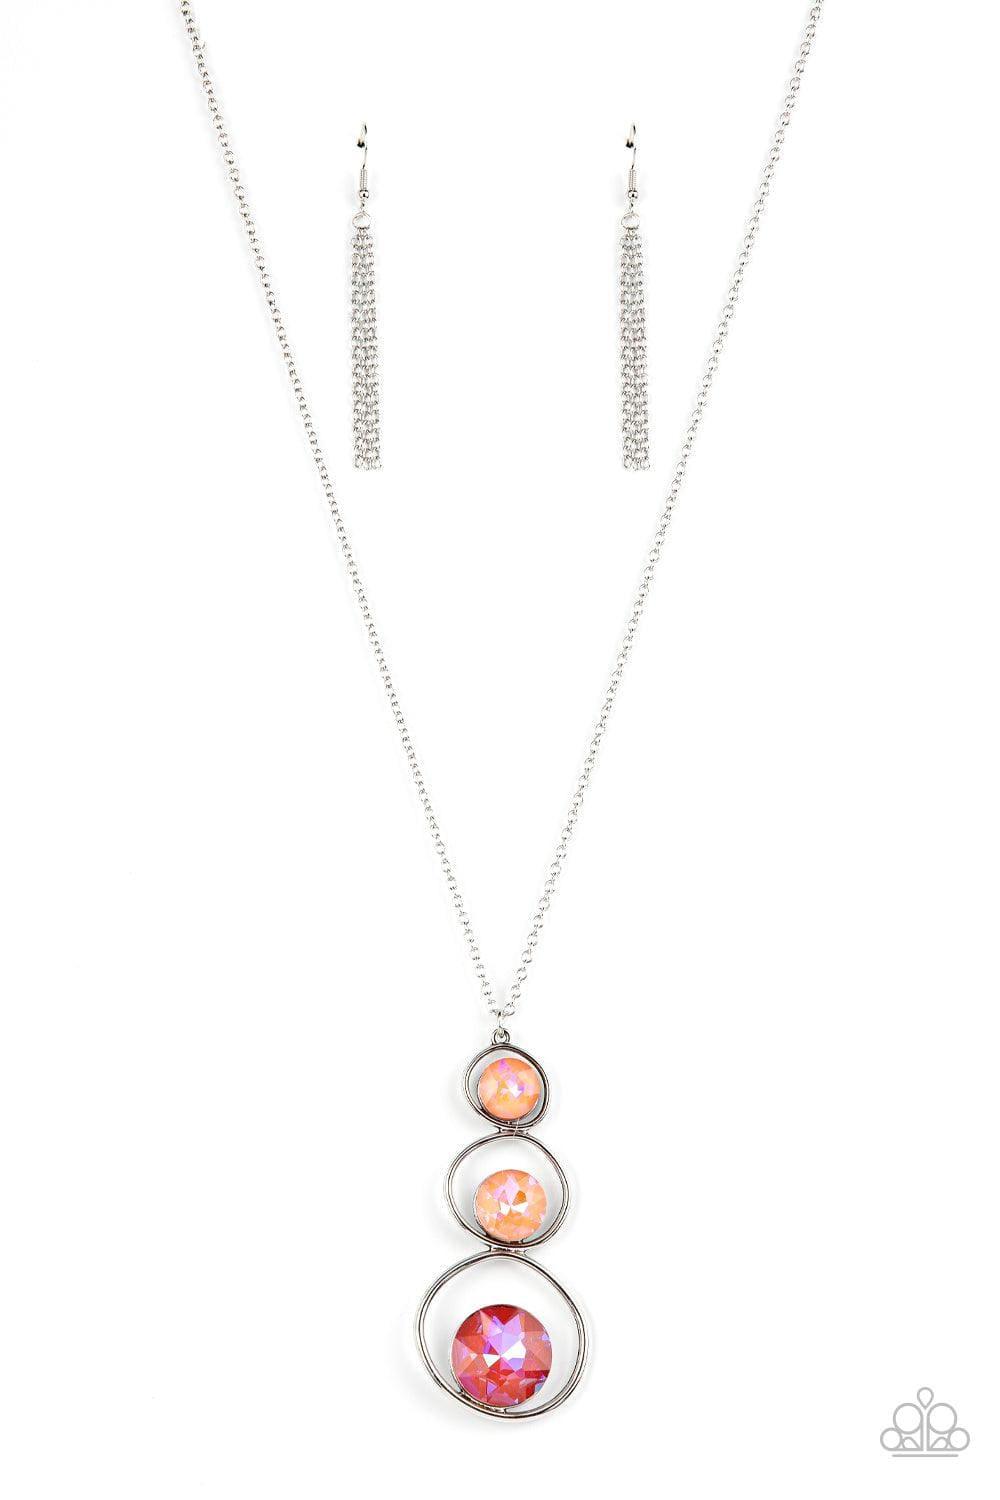 Paparazzi Accessories - Celestial Courtier - Orange (Coral) Necklace - Bling by JessieK